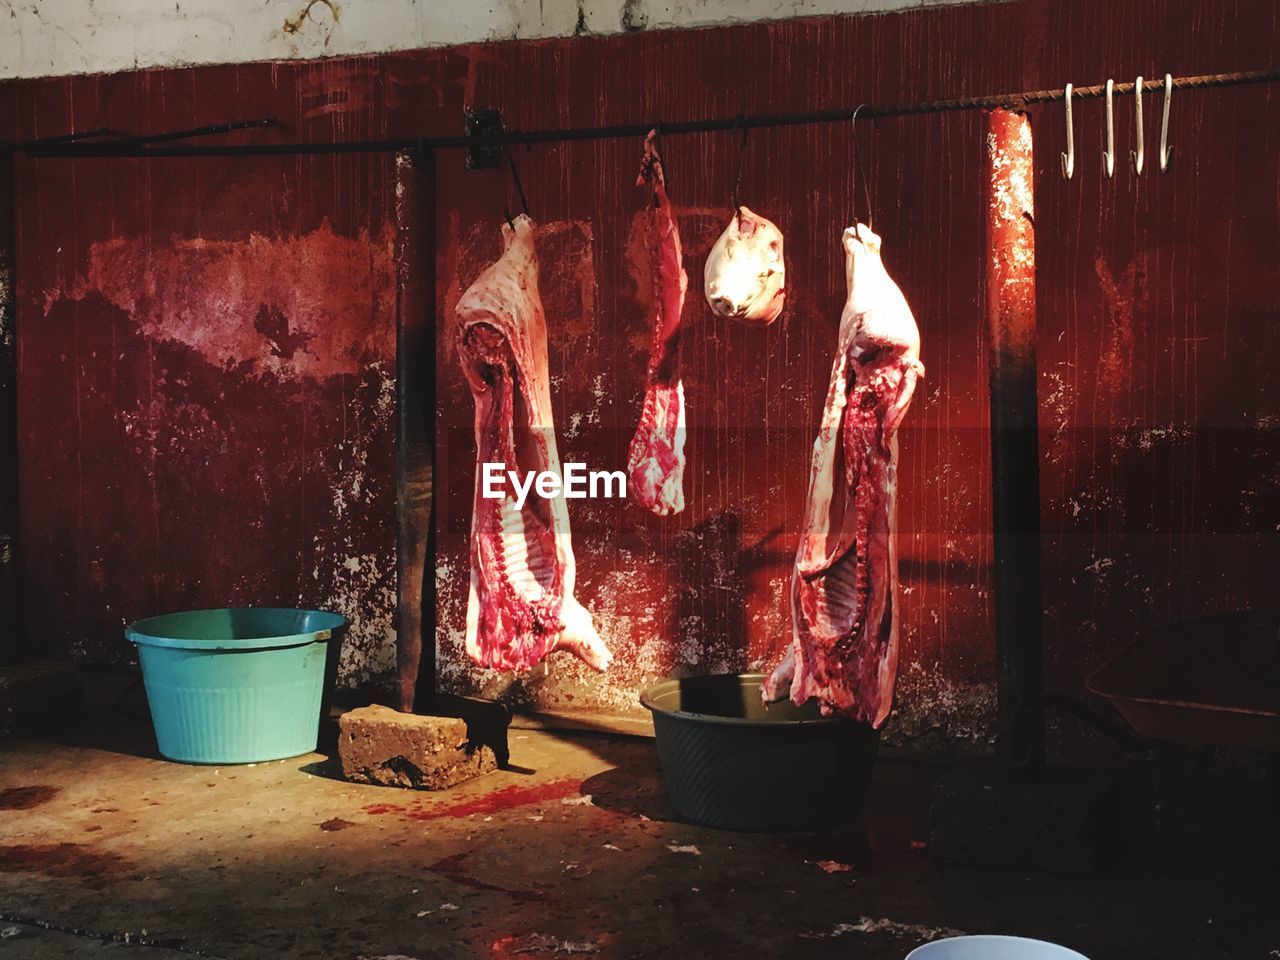 Meats hanging at butcher shop